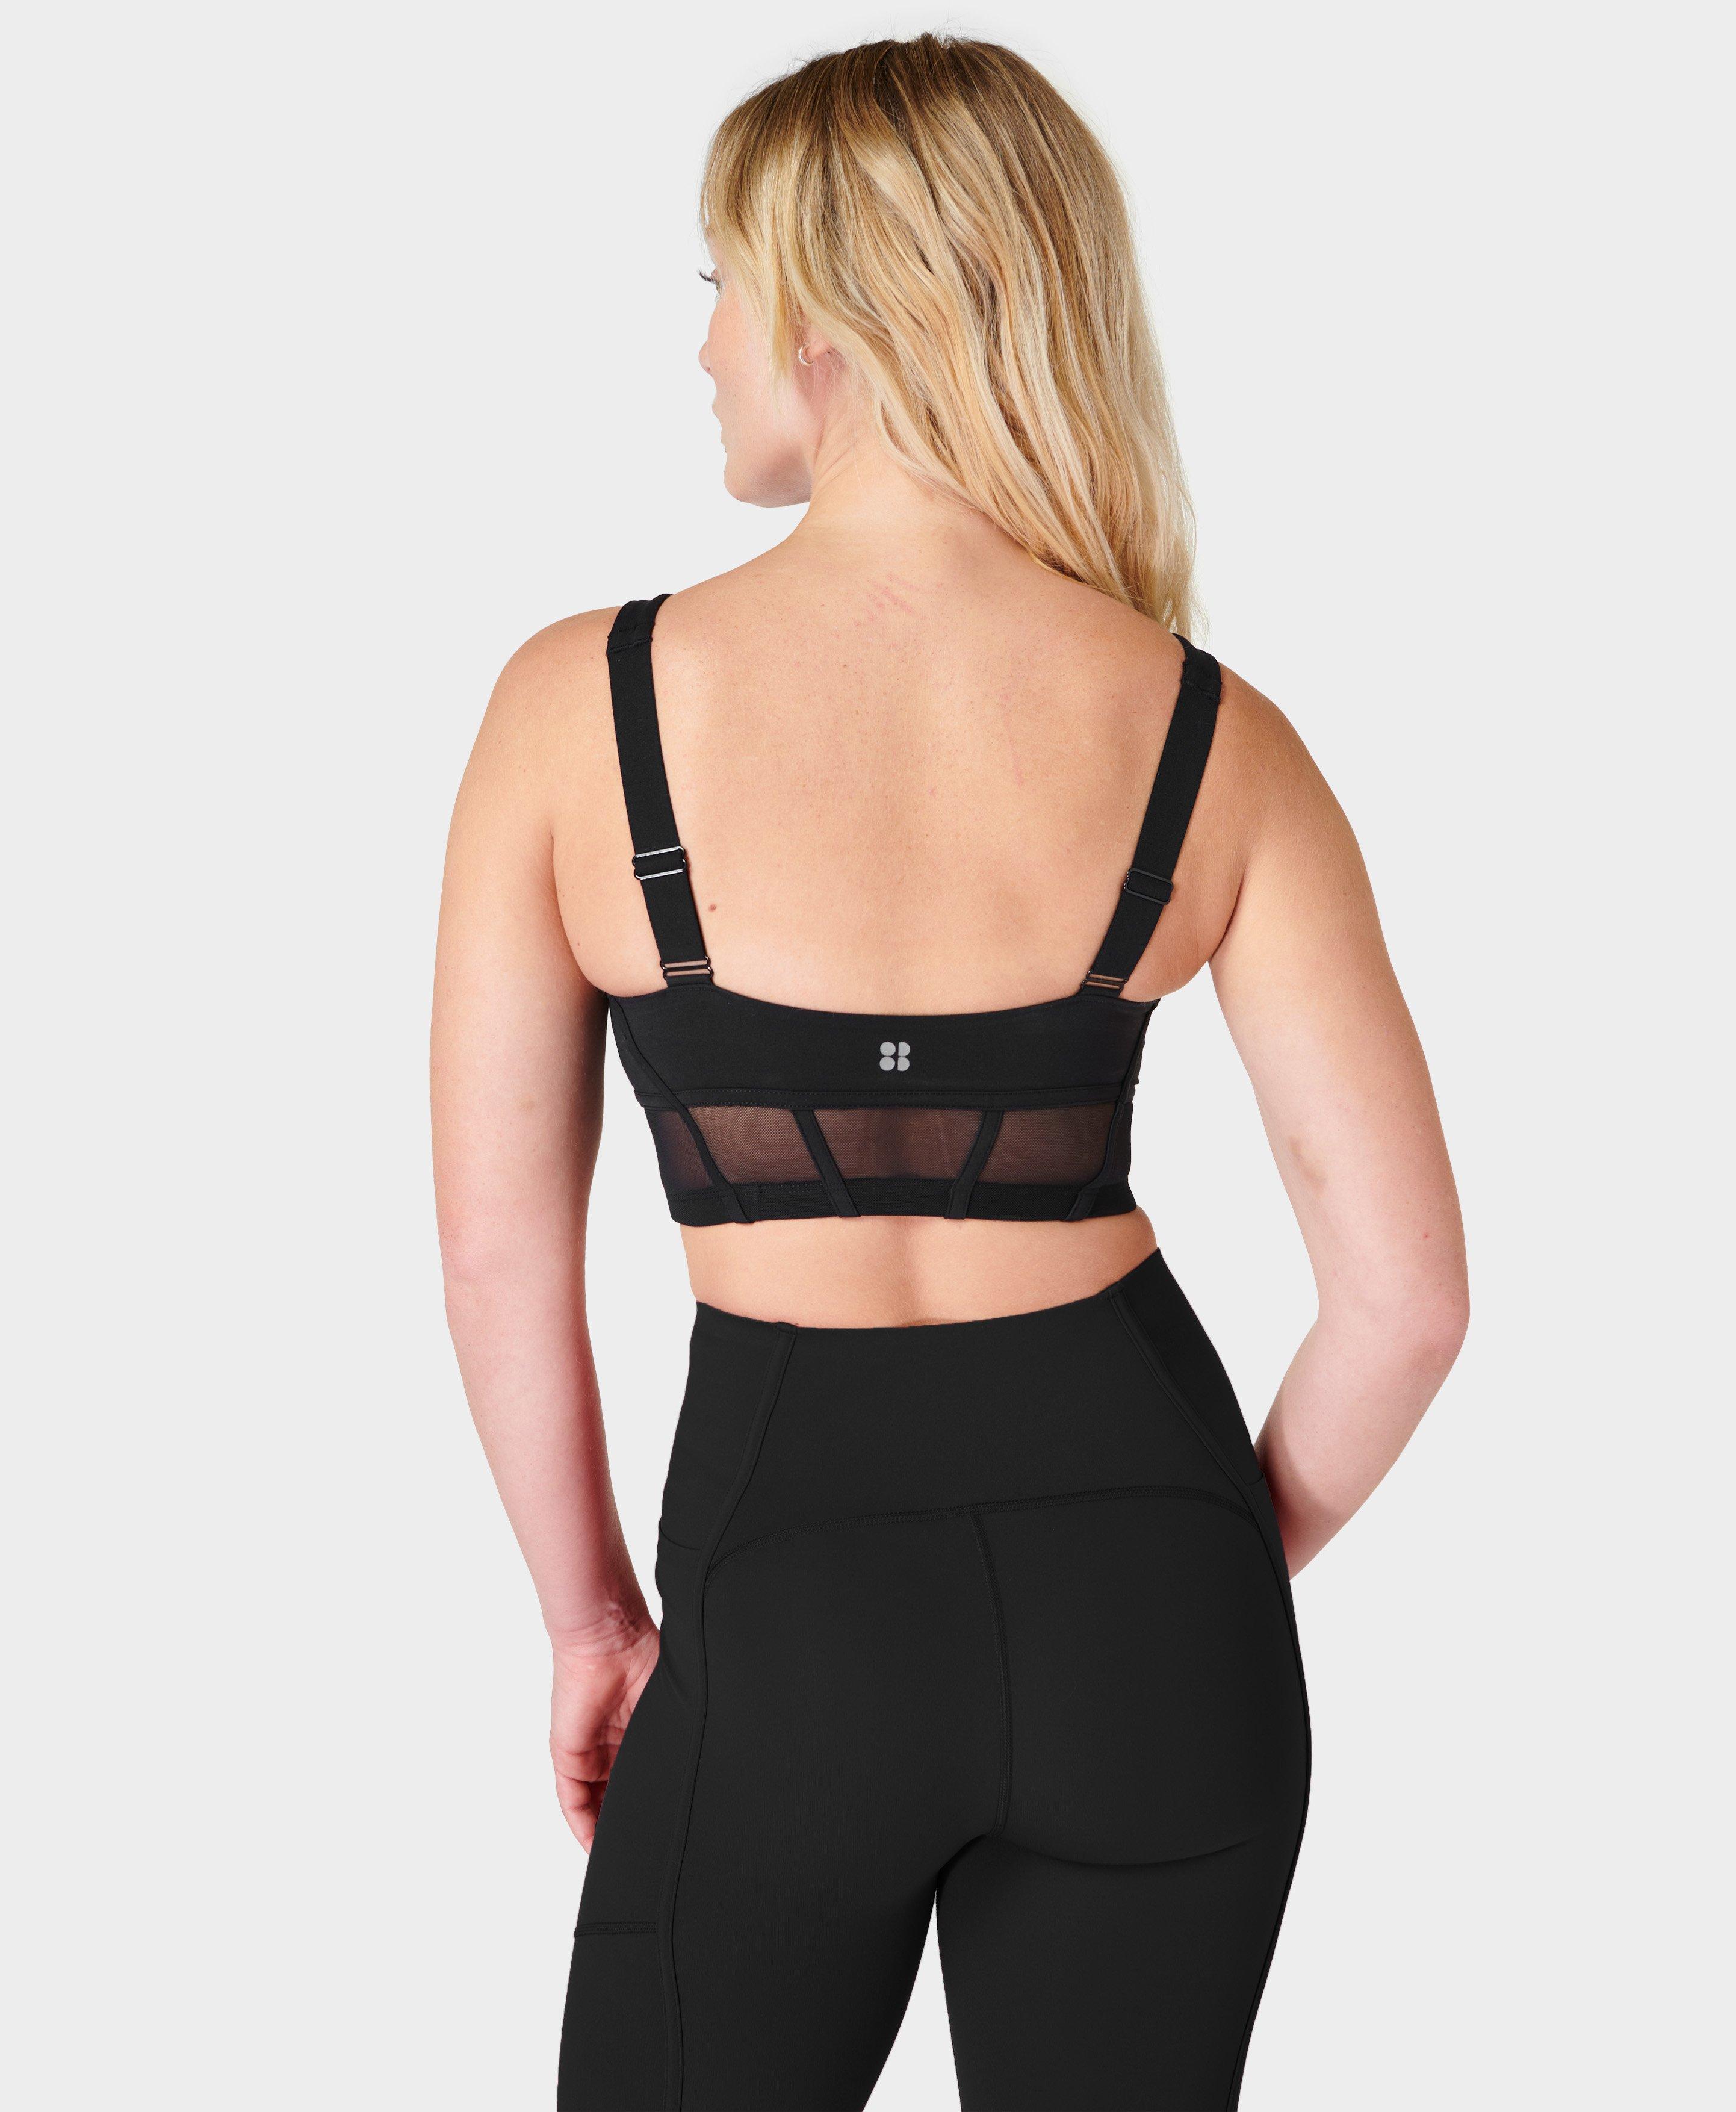 Women Breathable Sport Bra Short Corset Vest Underwear Tank Top